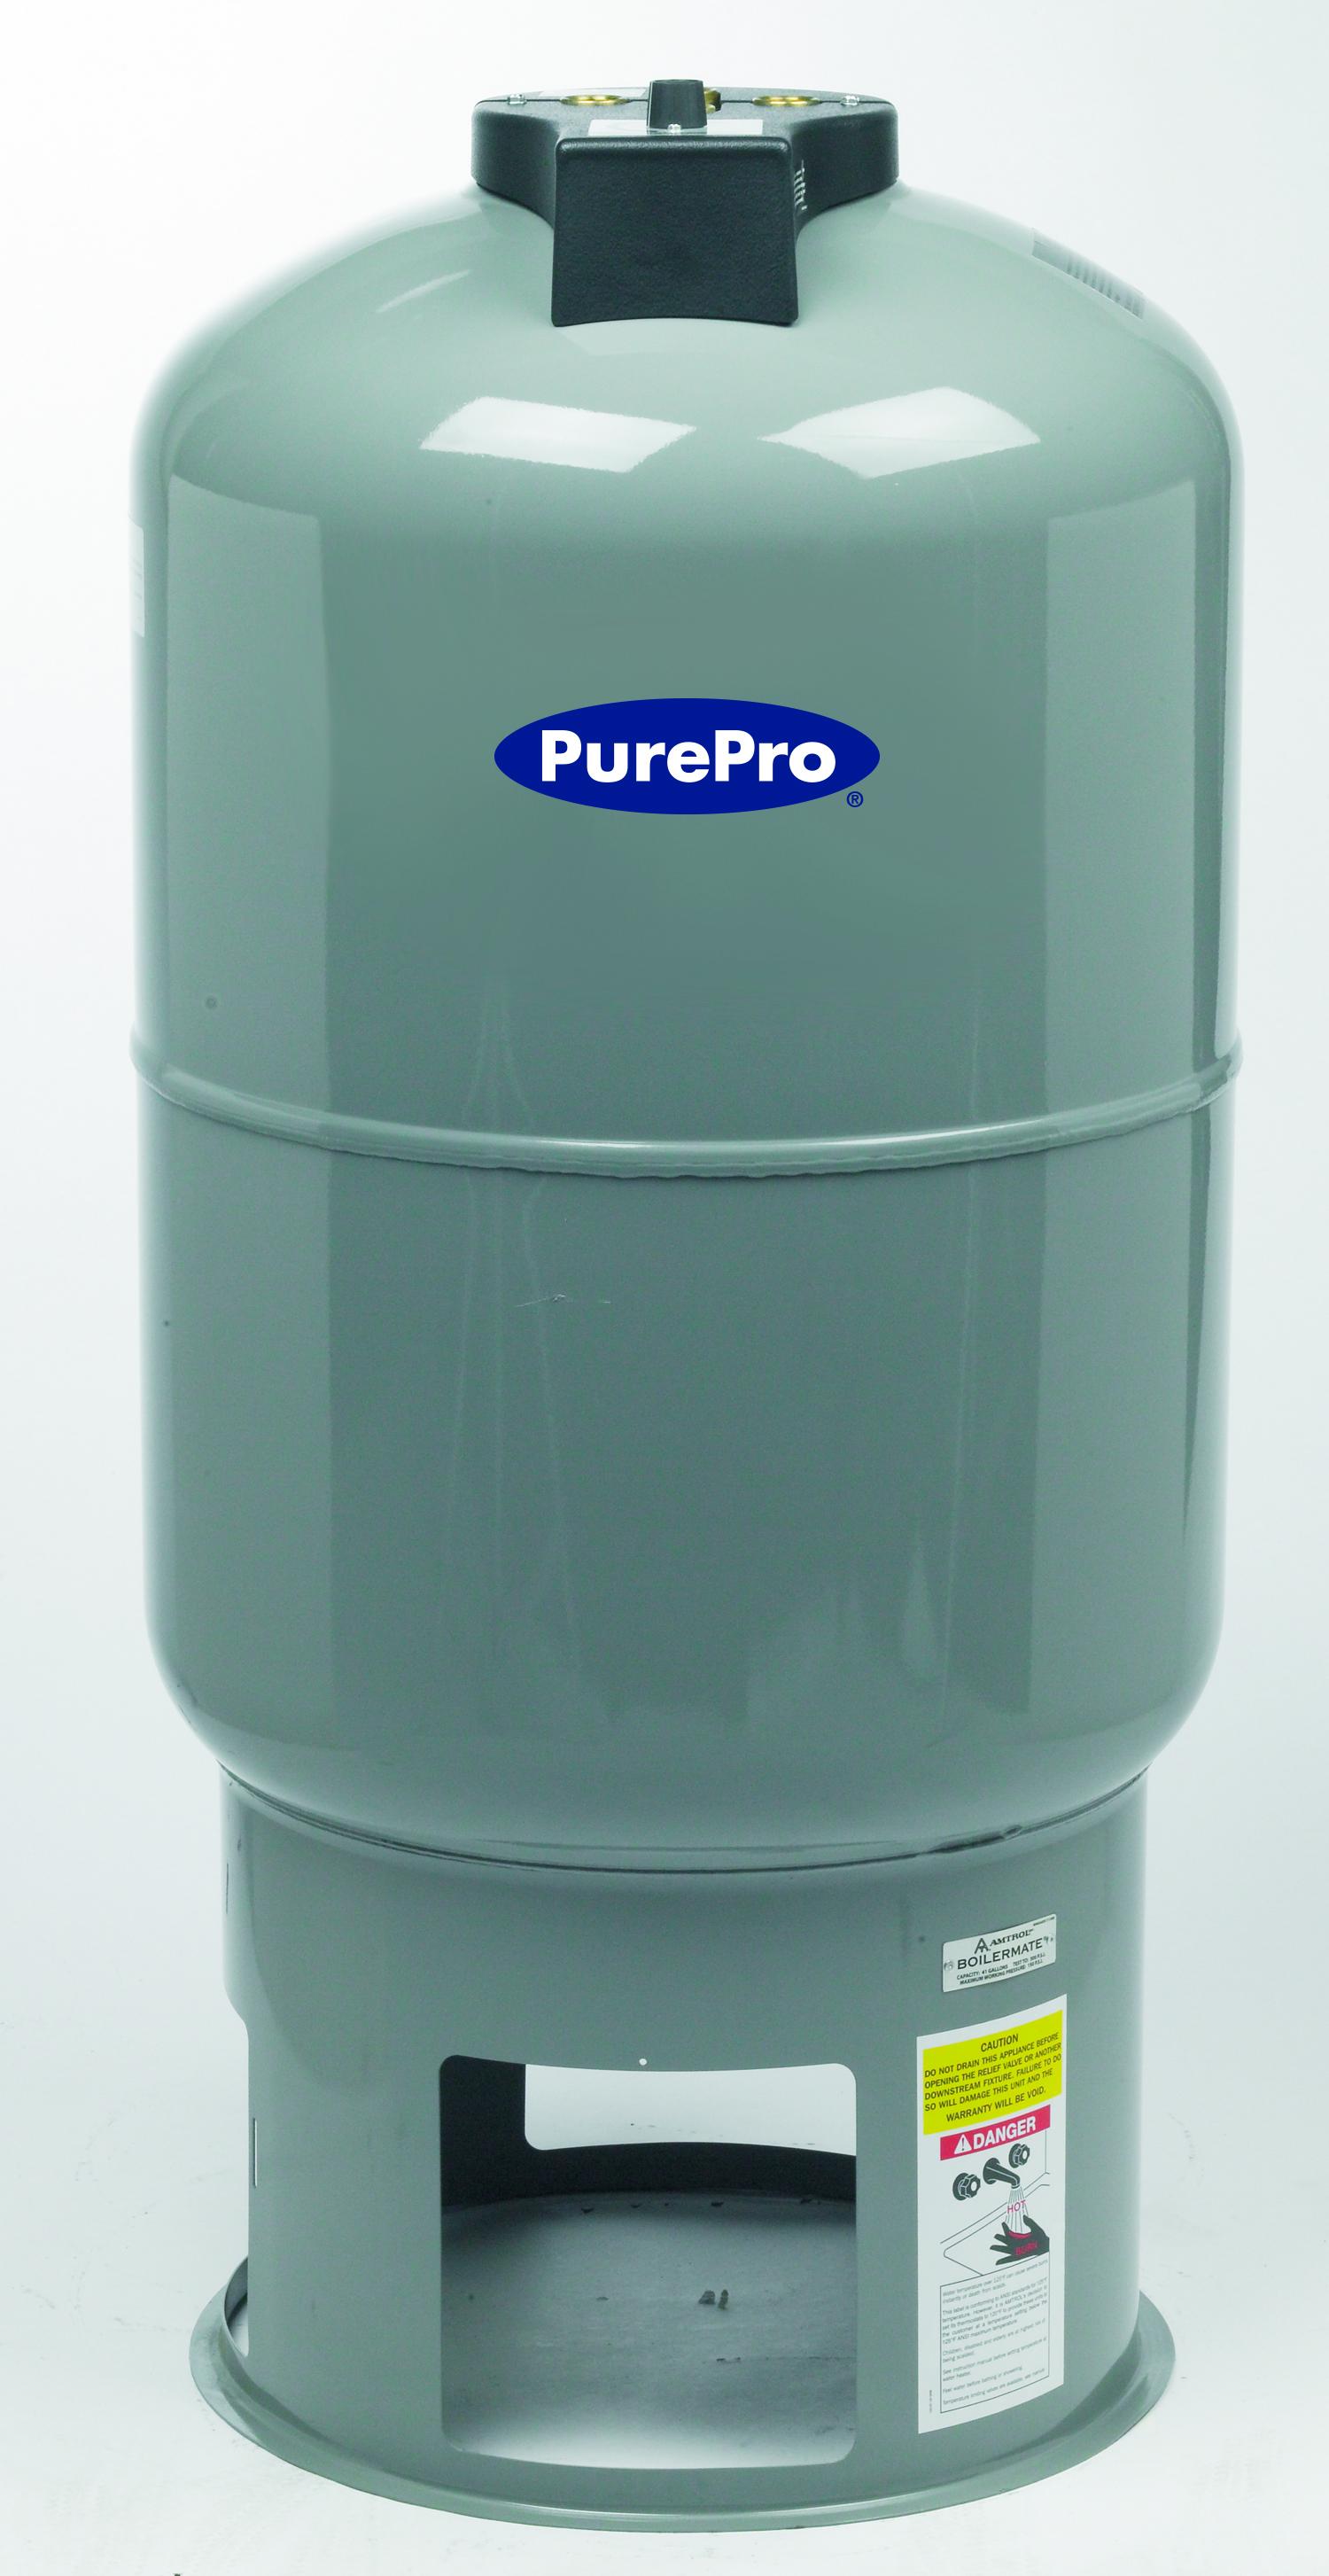 PurePro Hot Water Heater